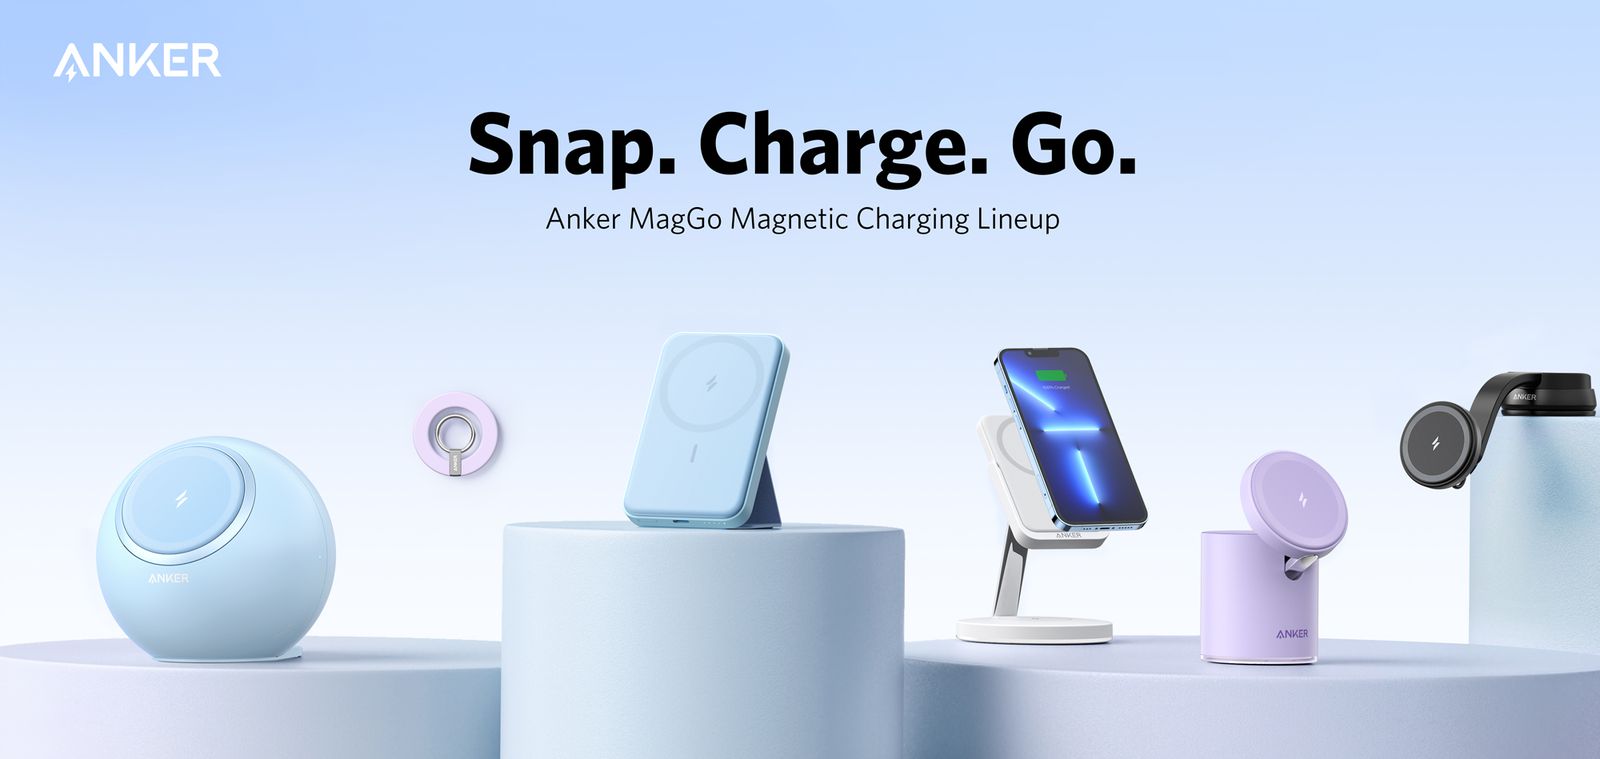 [討論] Anker 推出 MagSafe 新系列產品「MagGo」